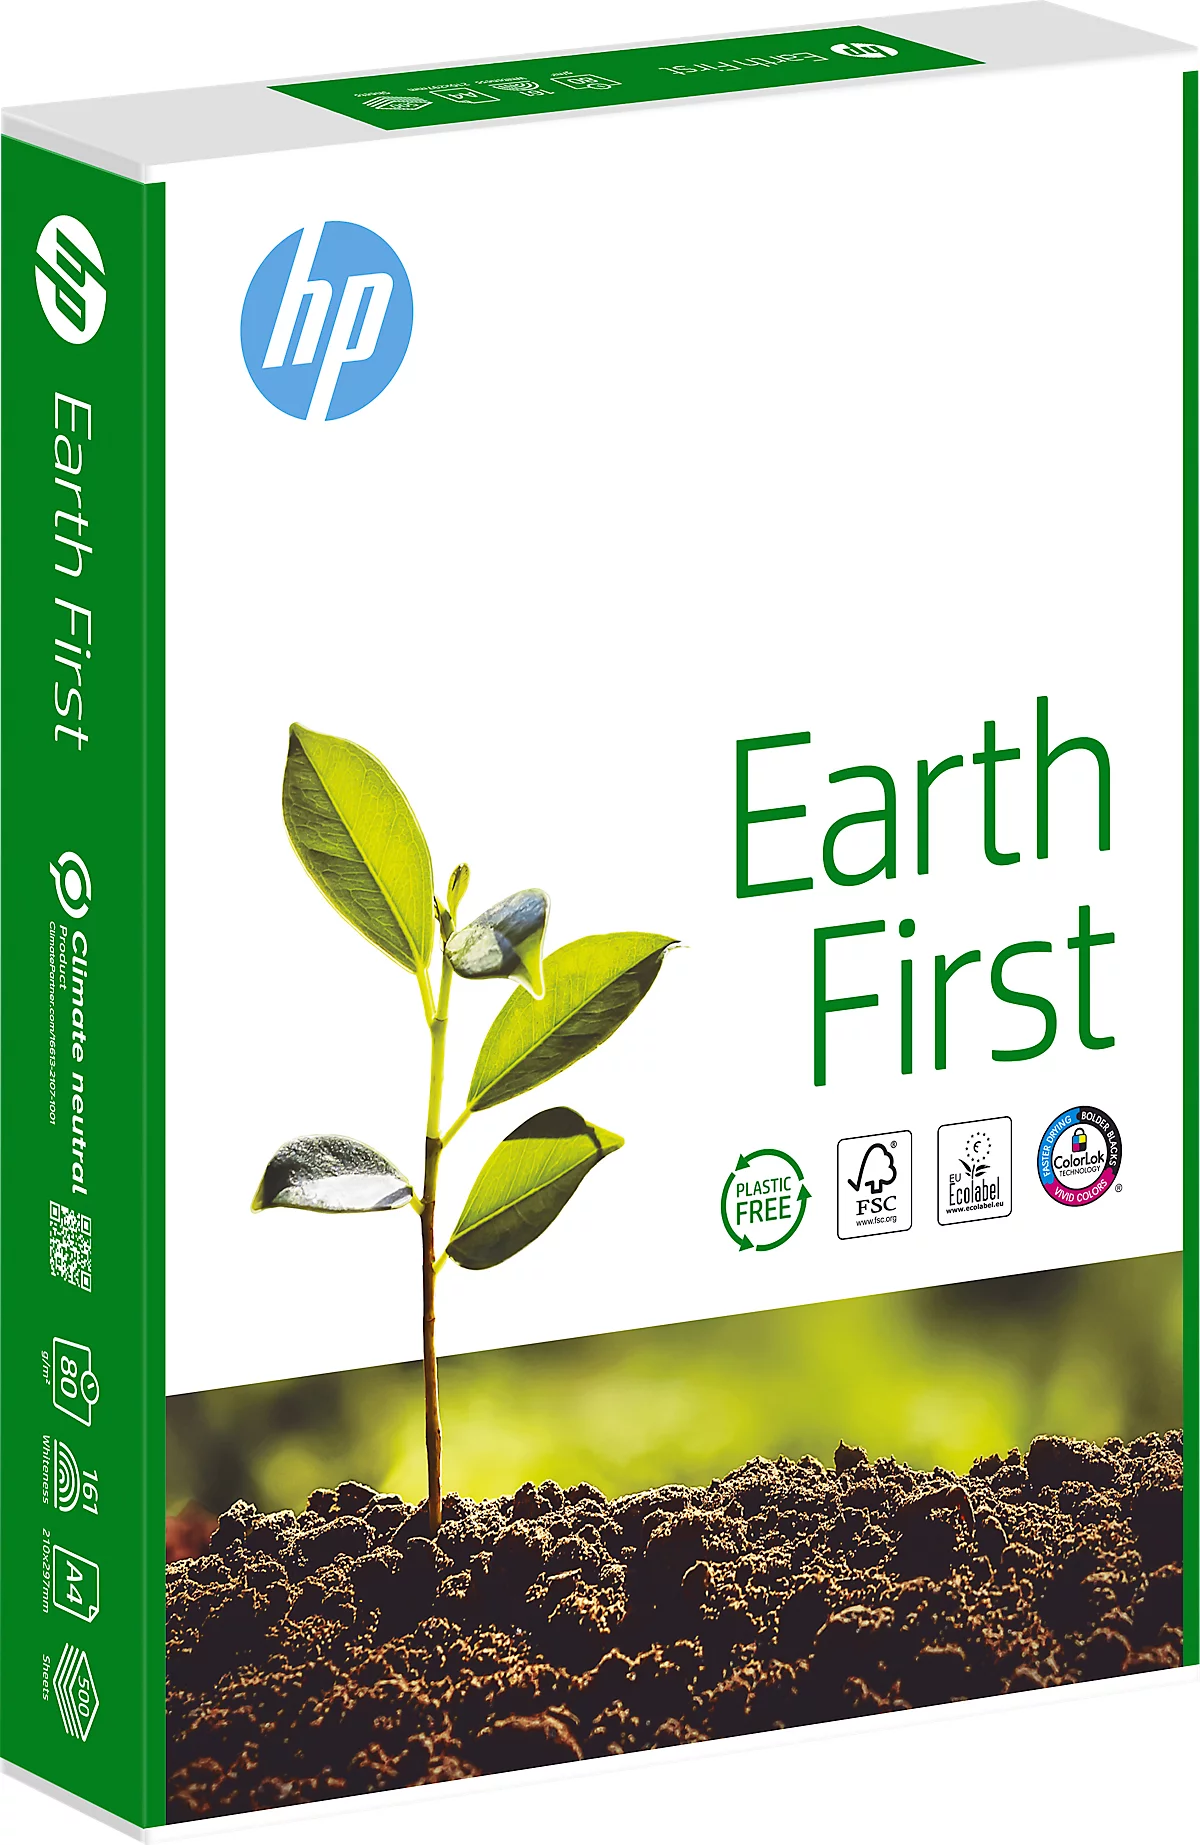 Kopierpapier HP Earth First CHP140, klimaneutral, DIN A4, 80 g/m², Reinweiß, 2 Karton = 10 x 500 Blatt